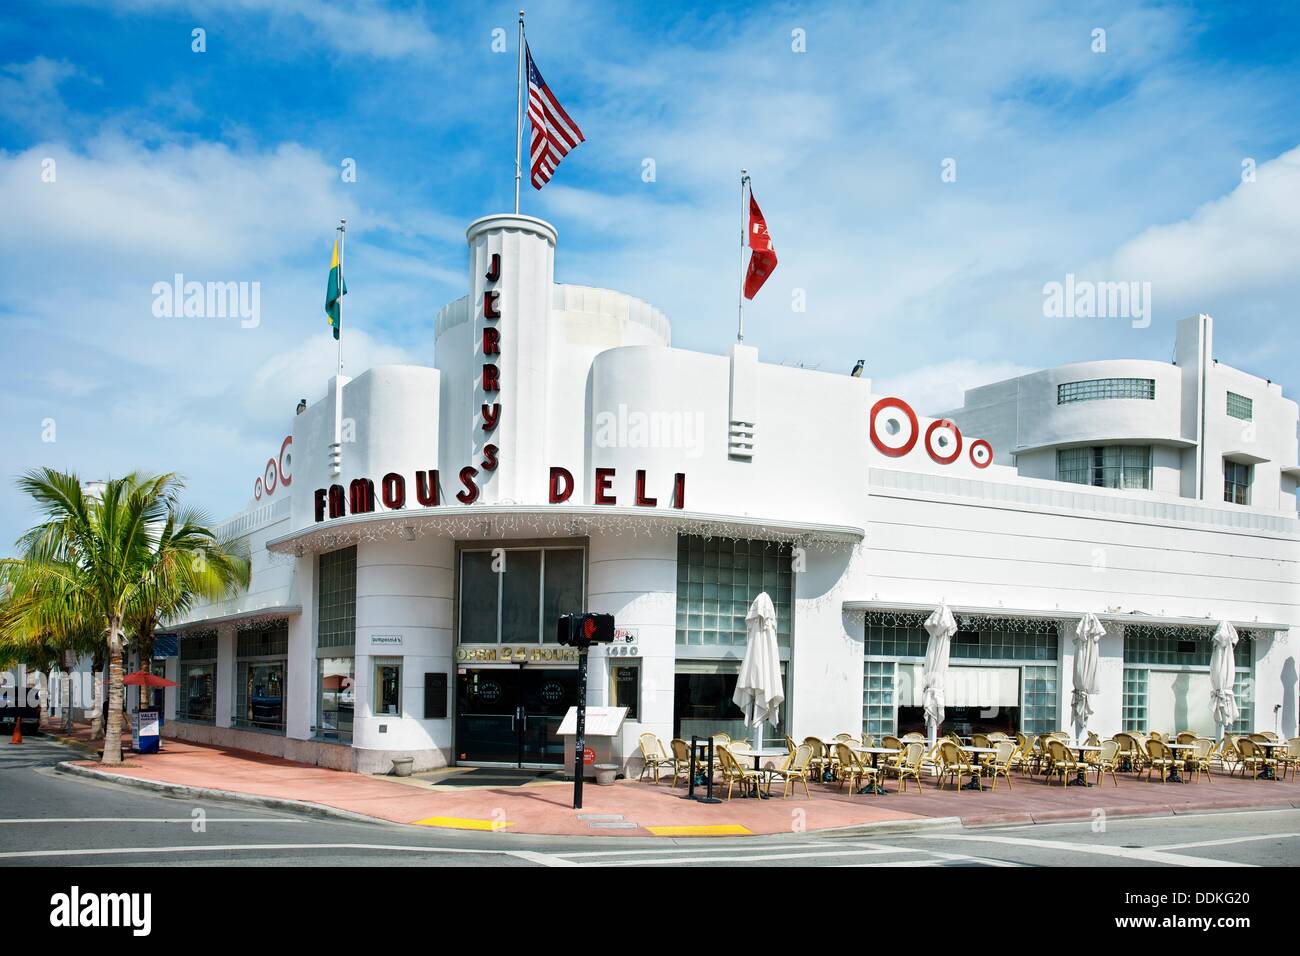 Art deco building, South Beach, Miami, Florida, USA Stock Photo